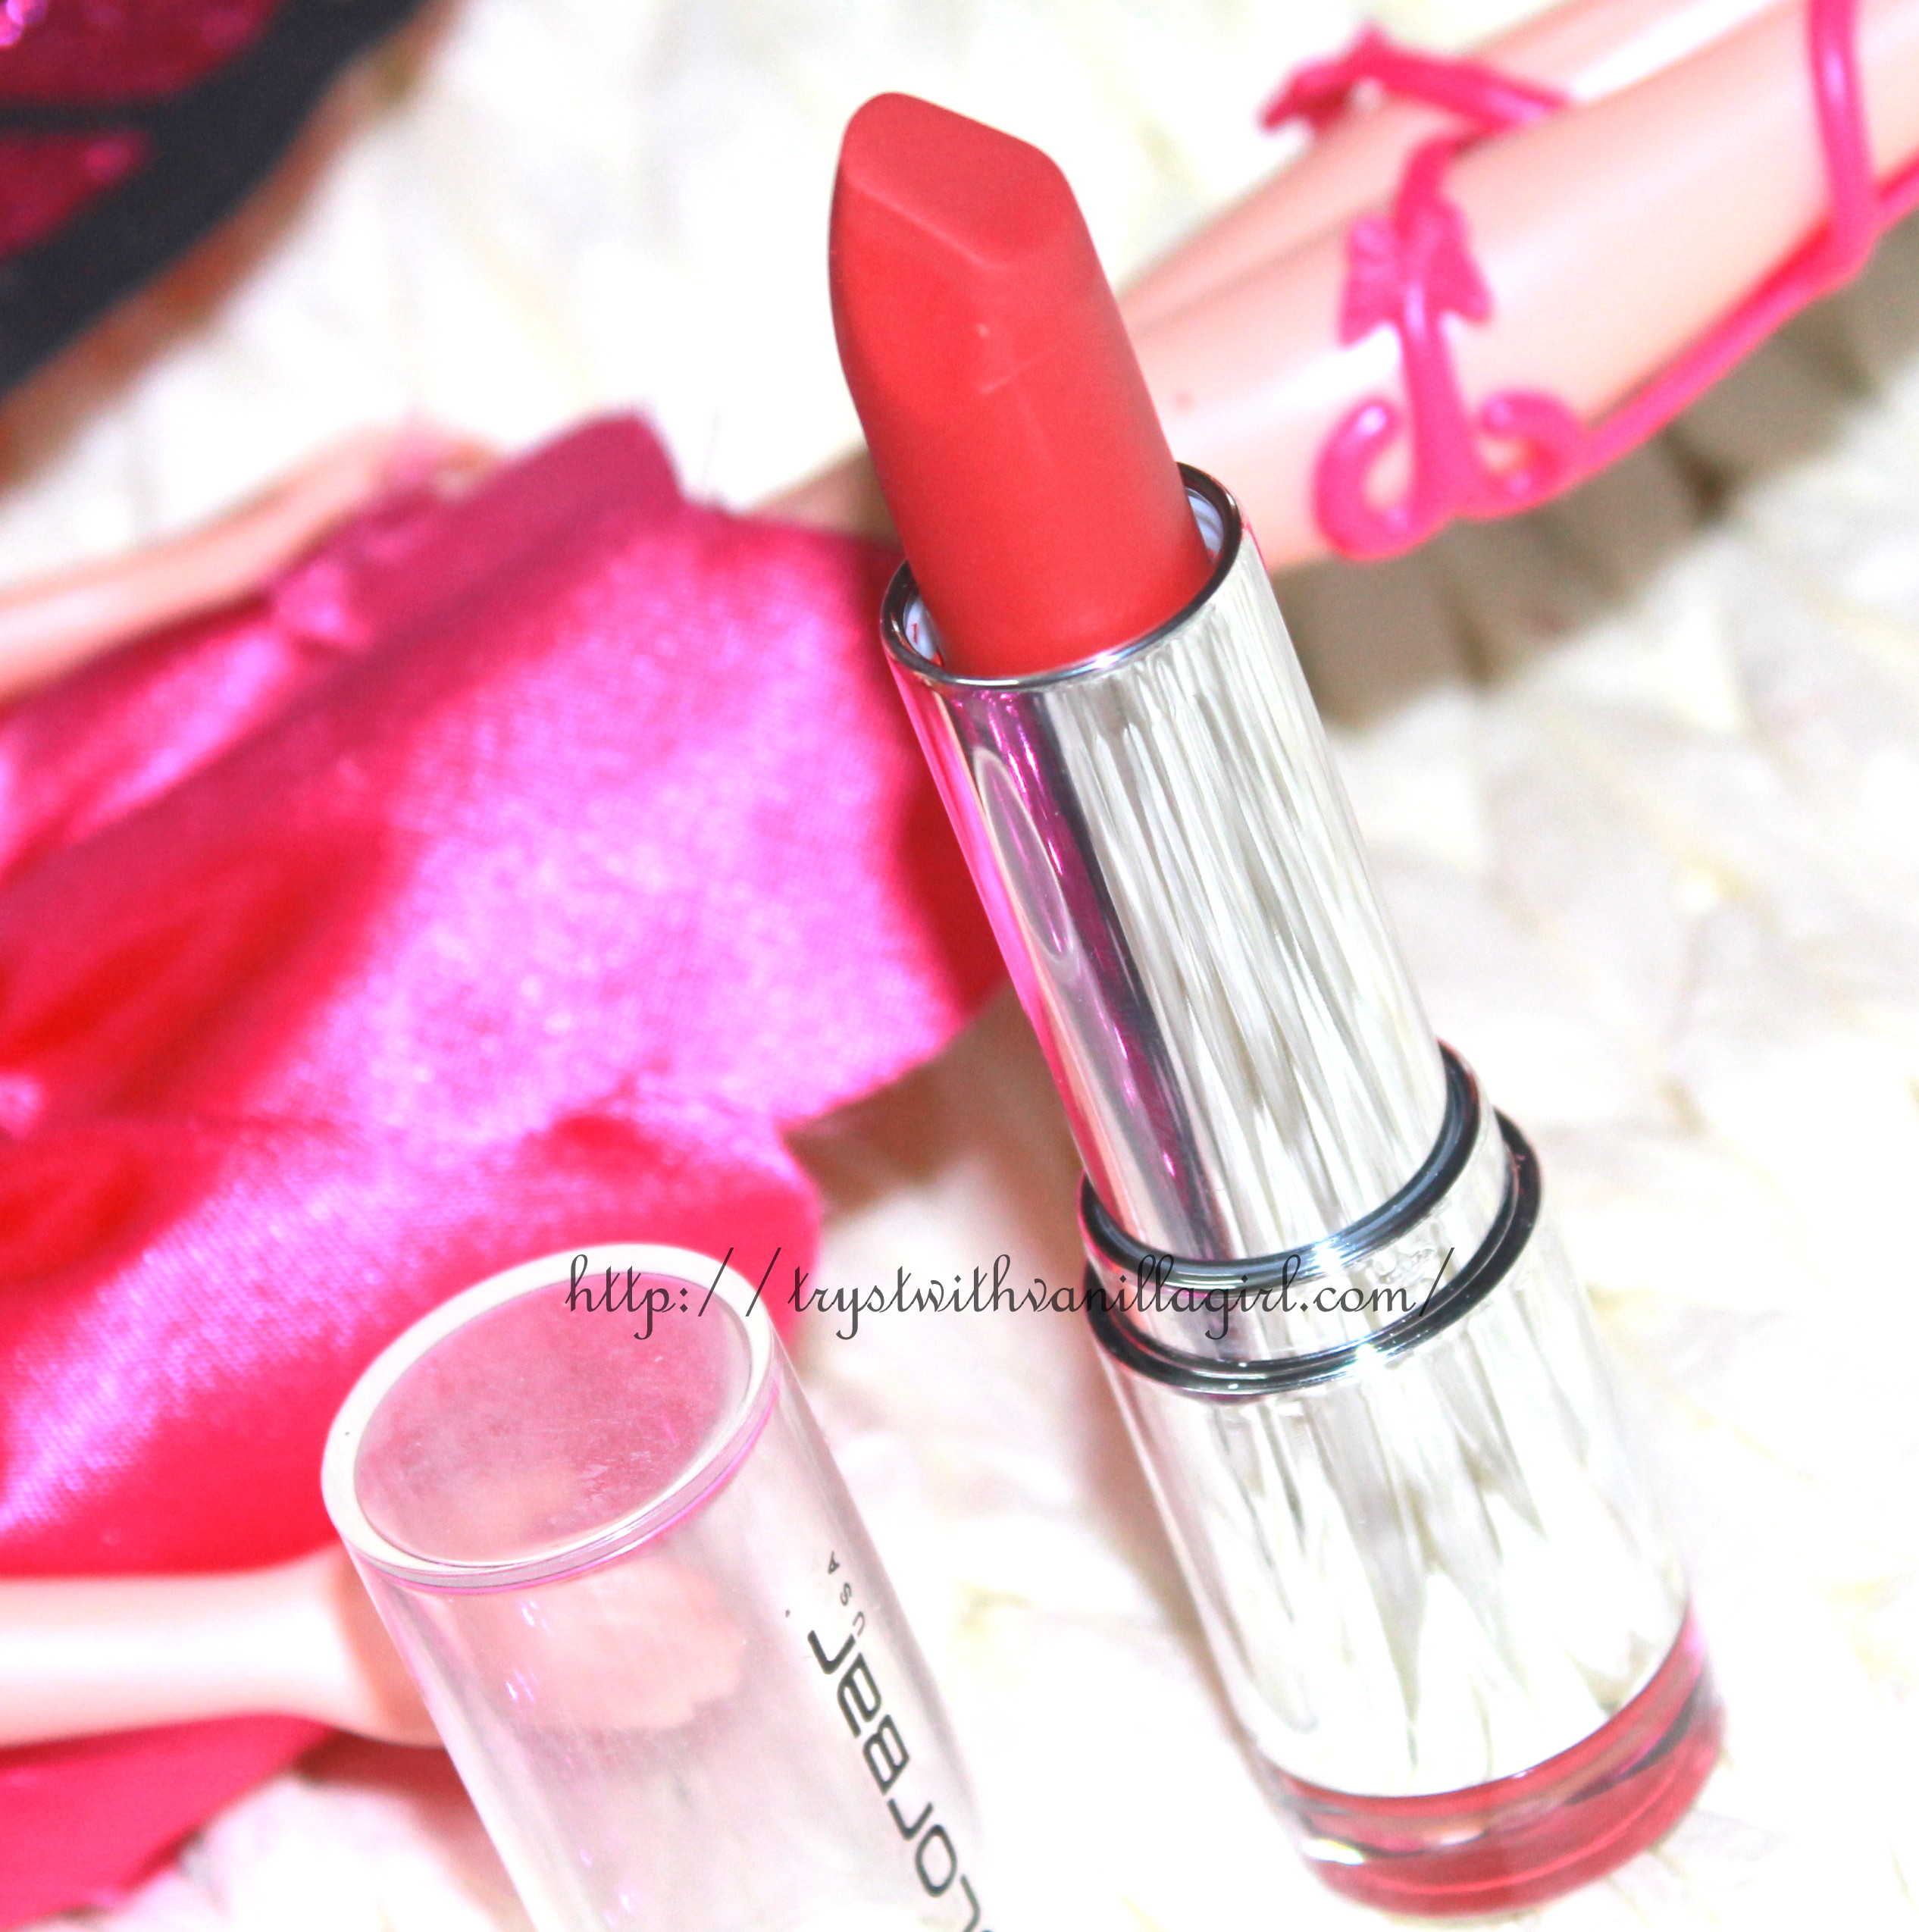 Colorbar Velvet Matte Lipstick Peach Crush Review,Swatch,Photos